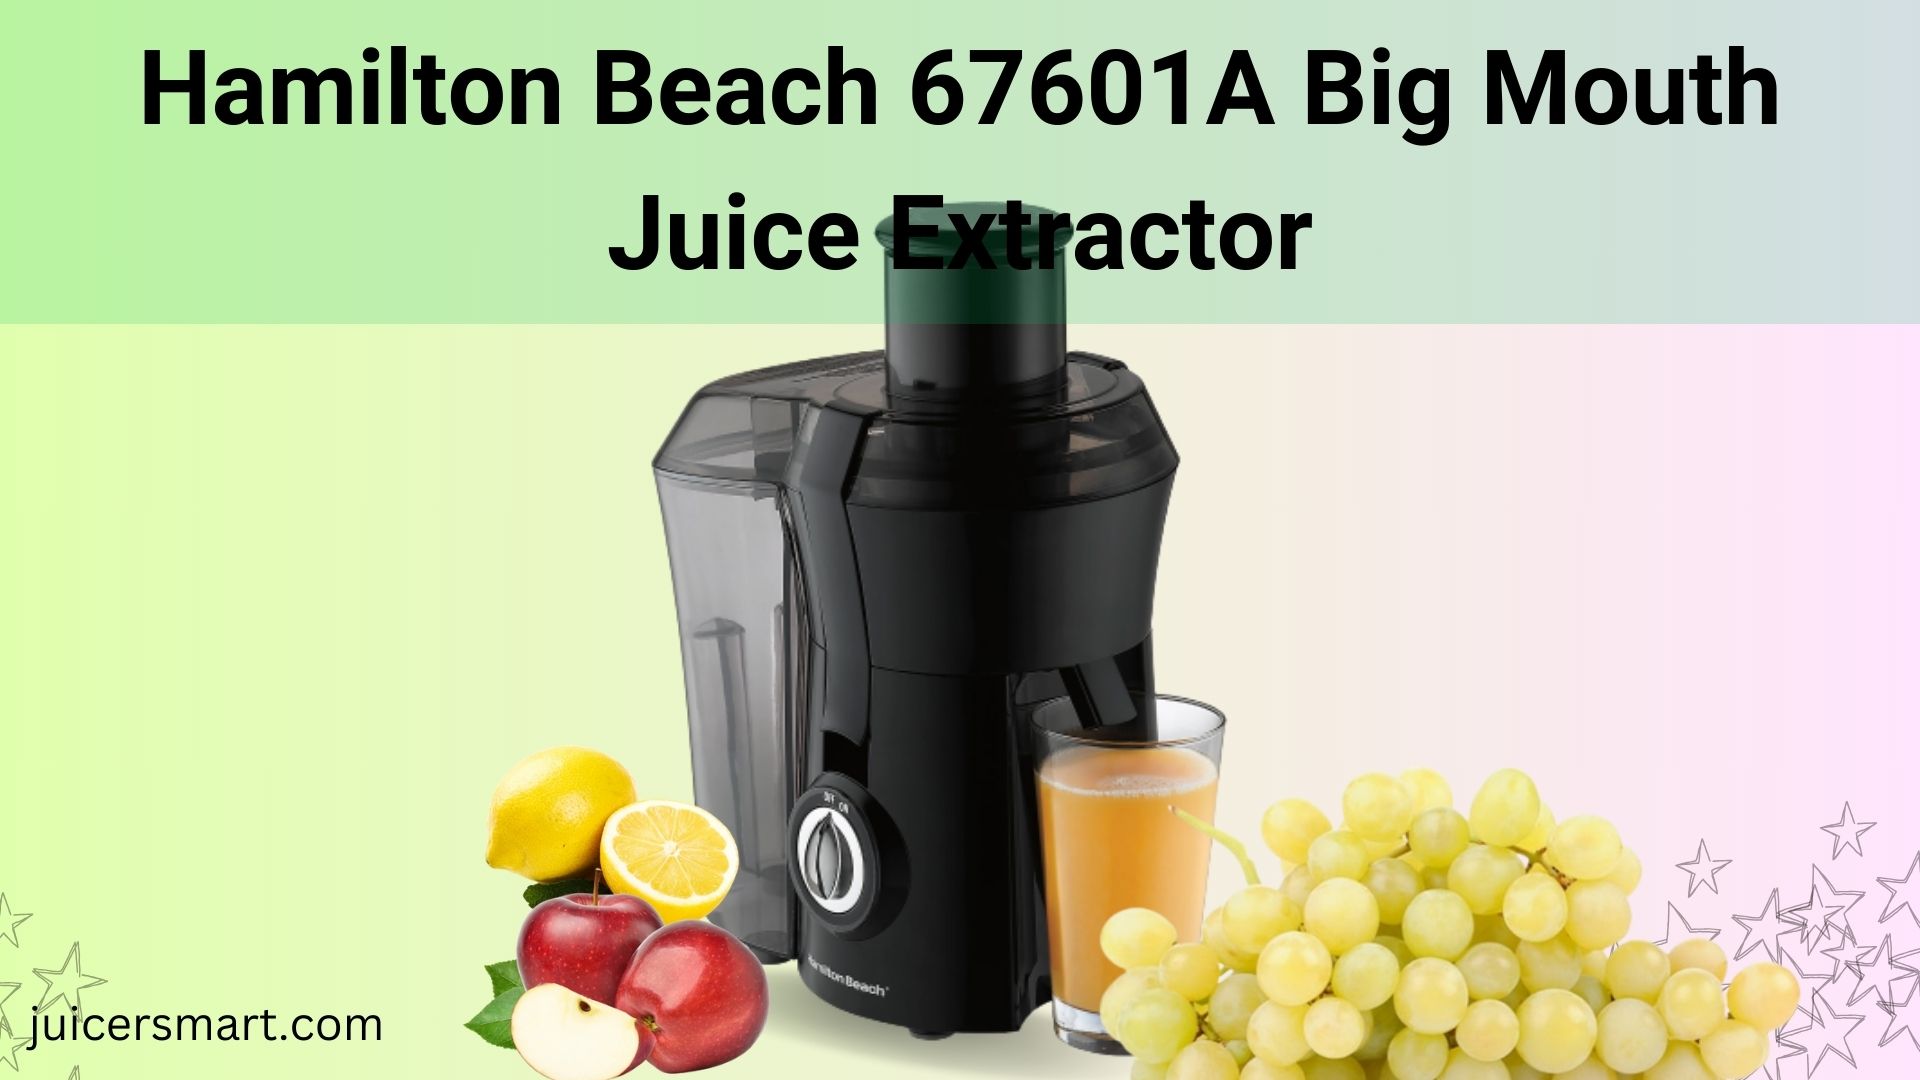 Hamilton Beach 67601A Big Mouth Juice Extractor